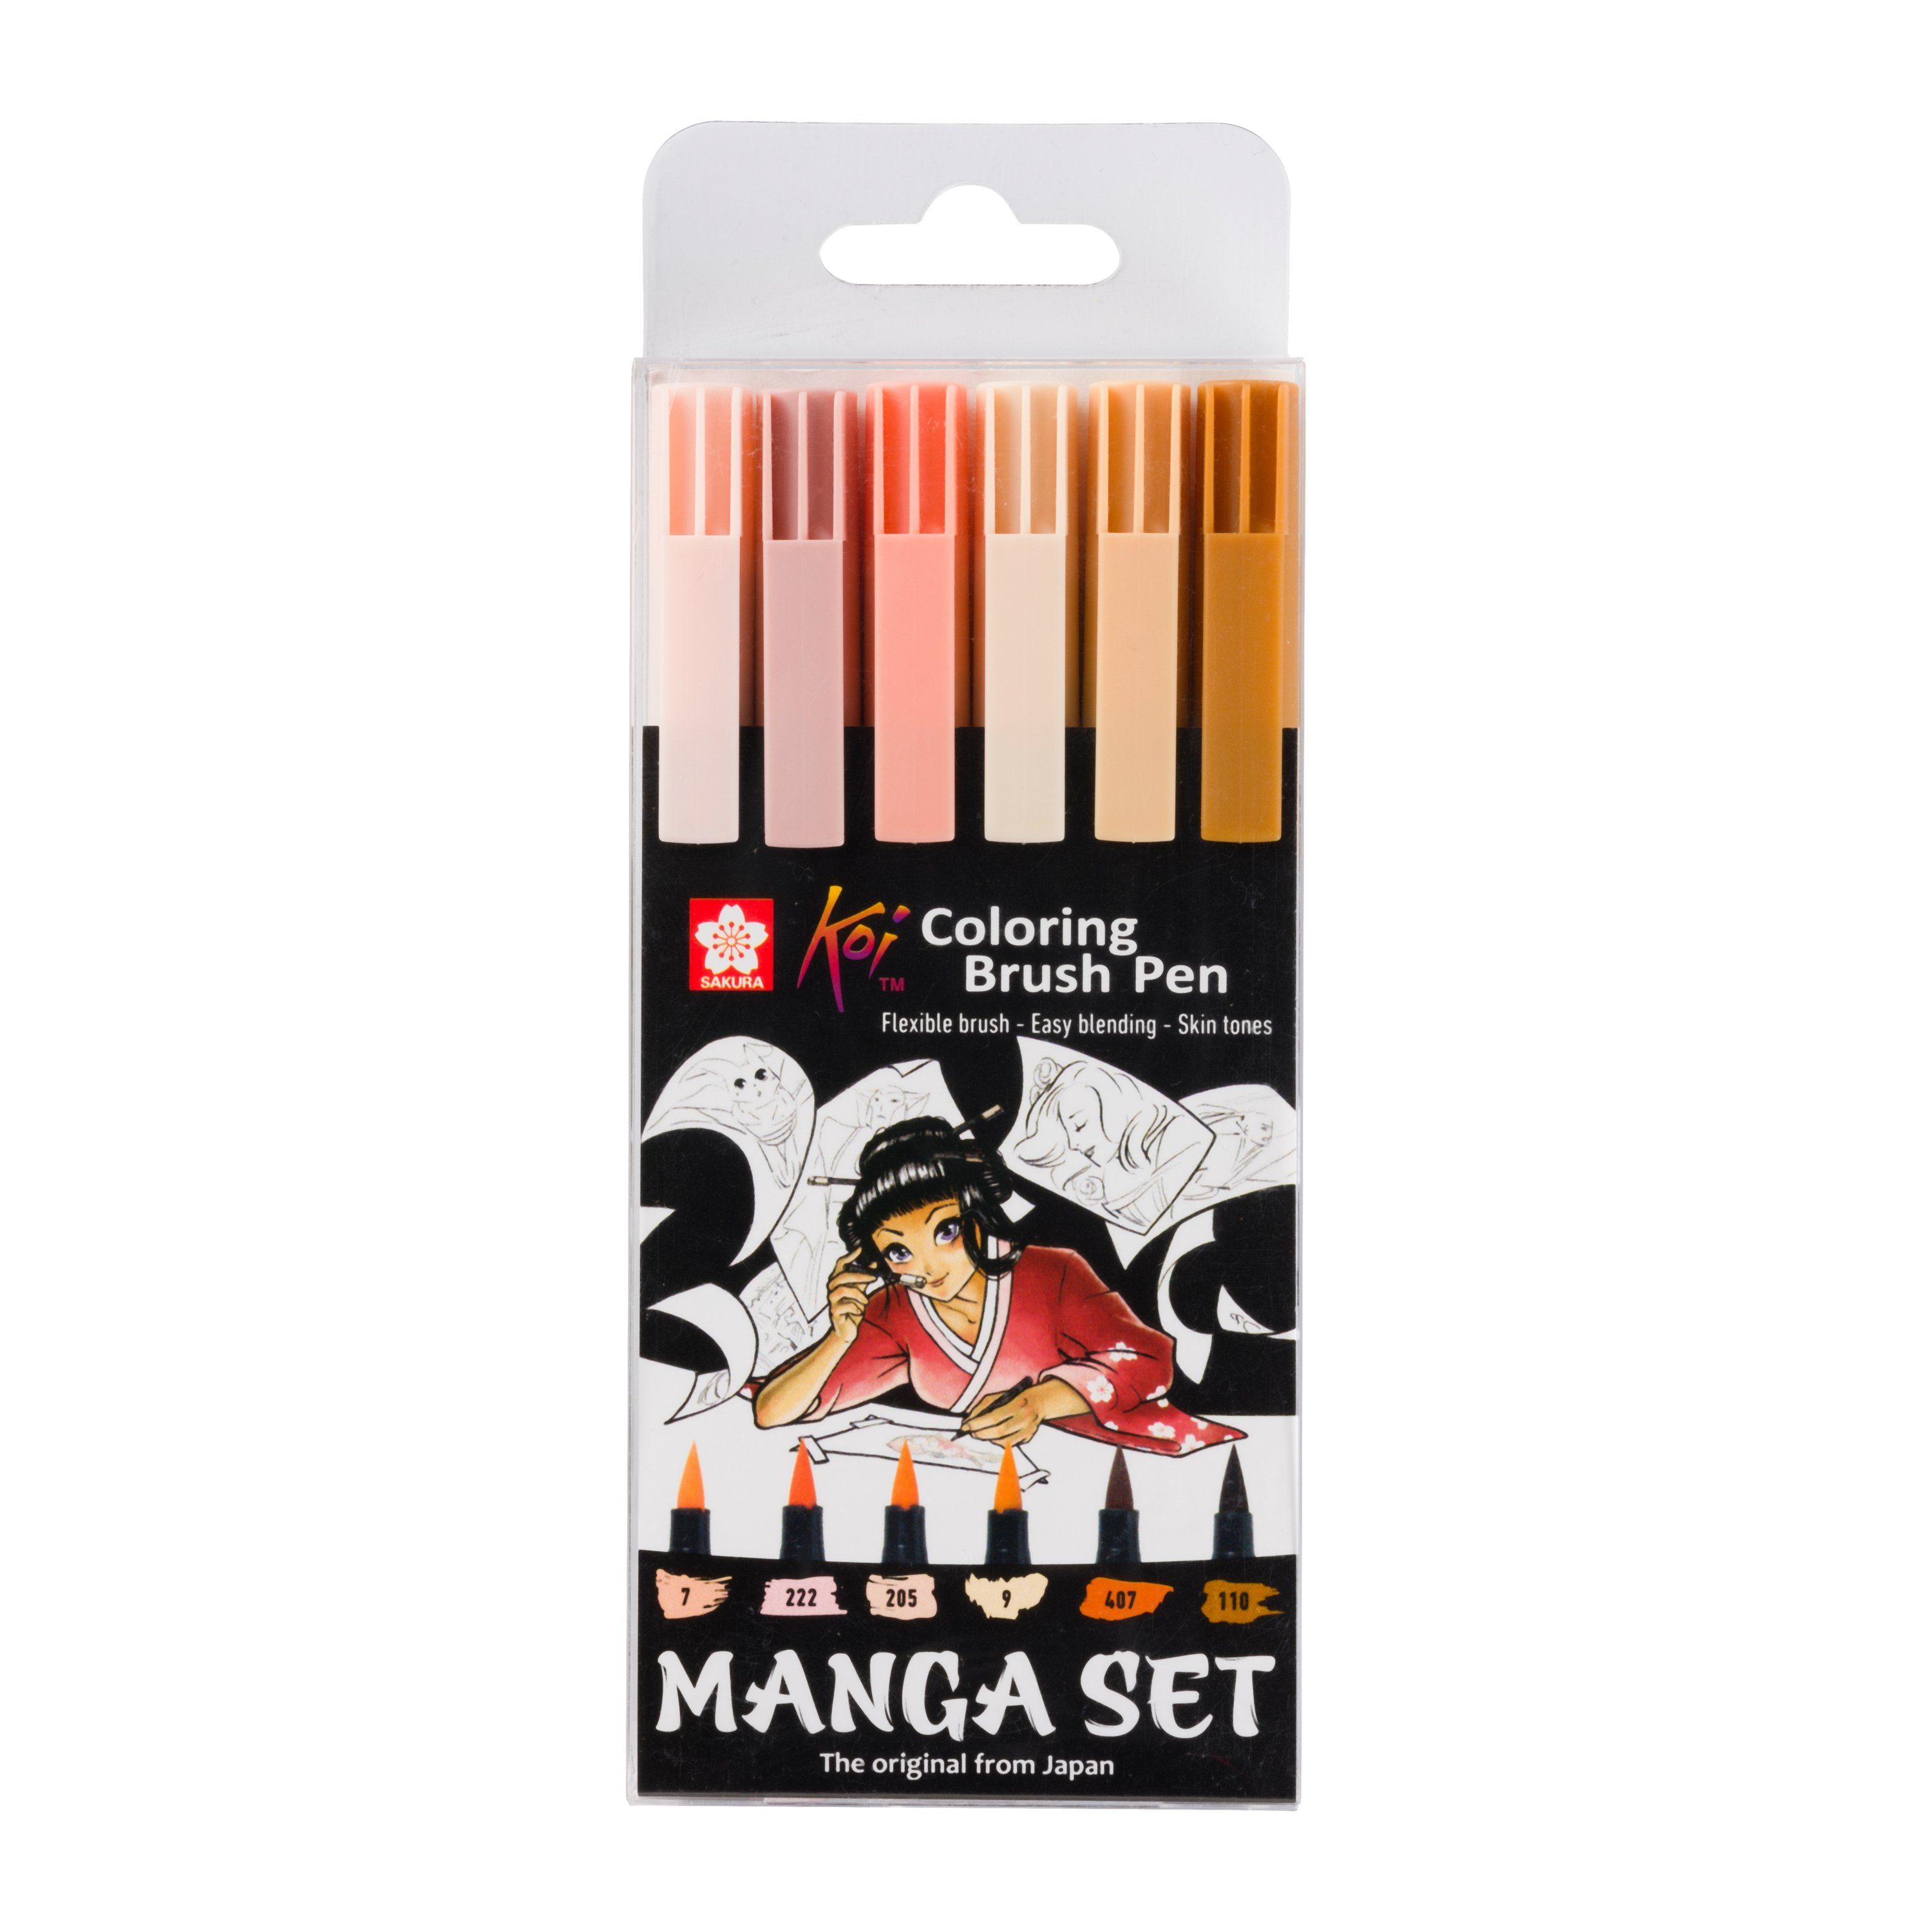 Sakura Pinselstift Koi Colouring Sammlung, pen Brush 6er-Set Manga